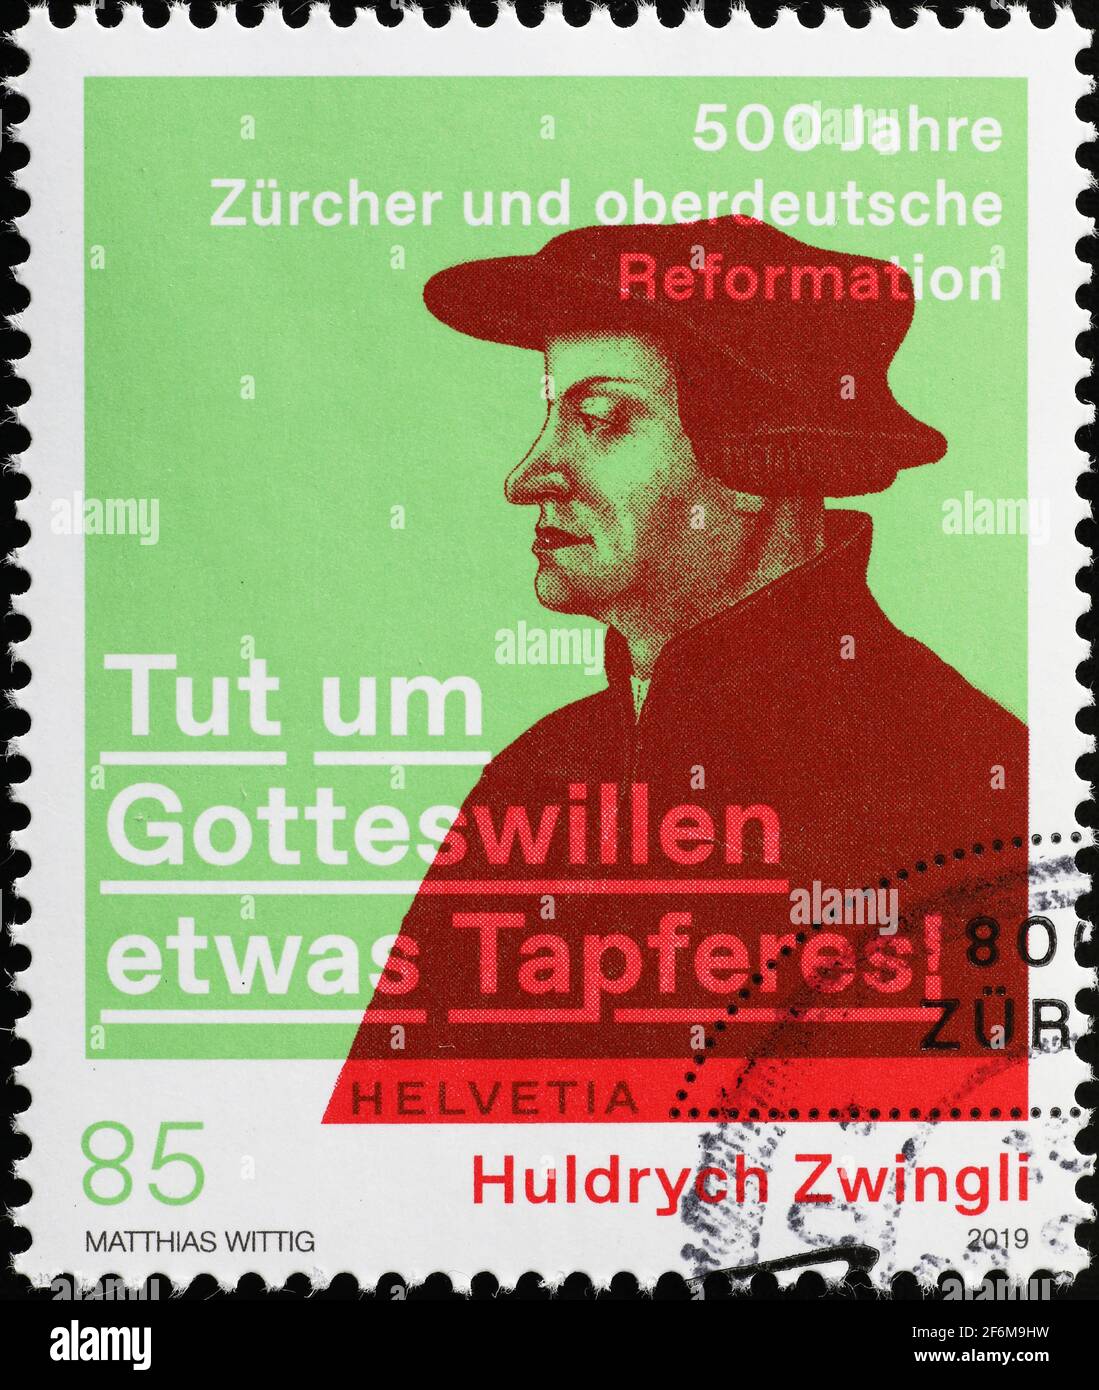 Huldrych Zwingli retrato sobre sello de franqueo suizo Foto de stock